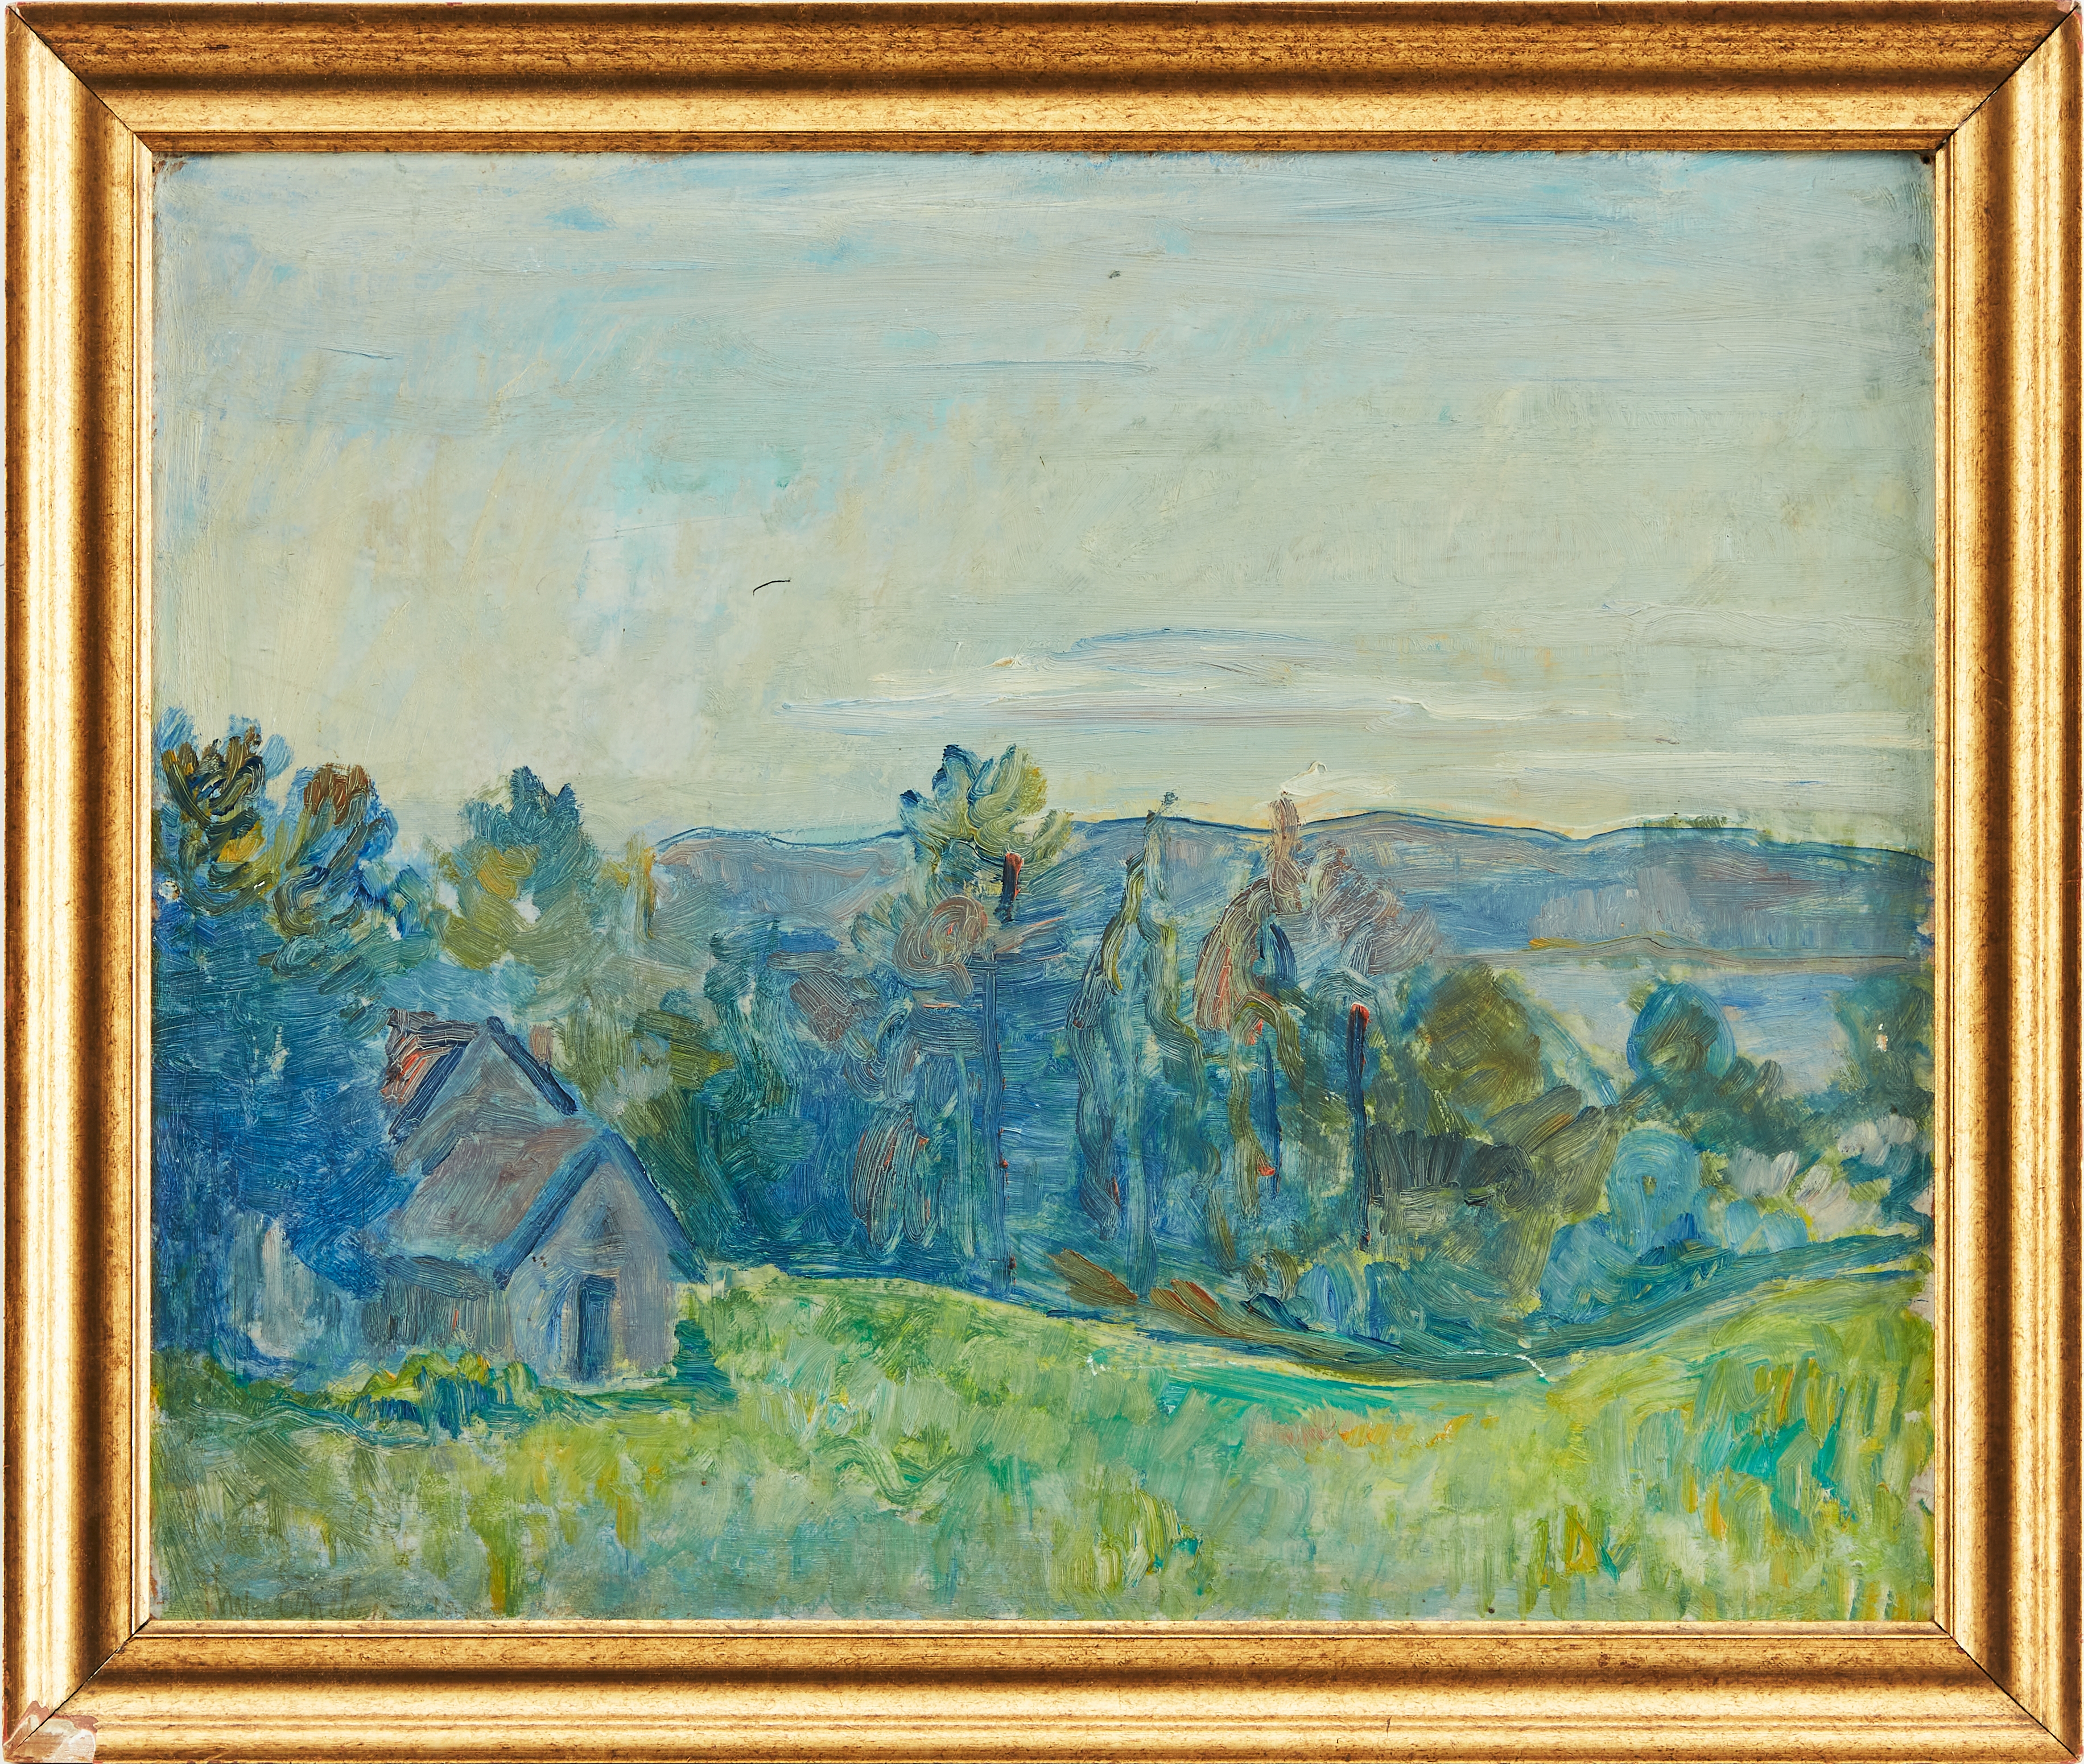 Landskap med hus by Thorvald Erichsen, 1917